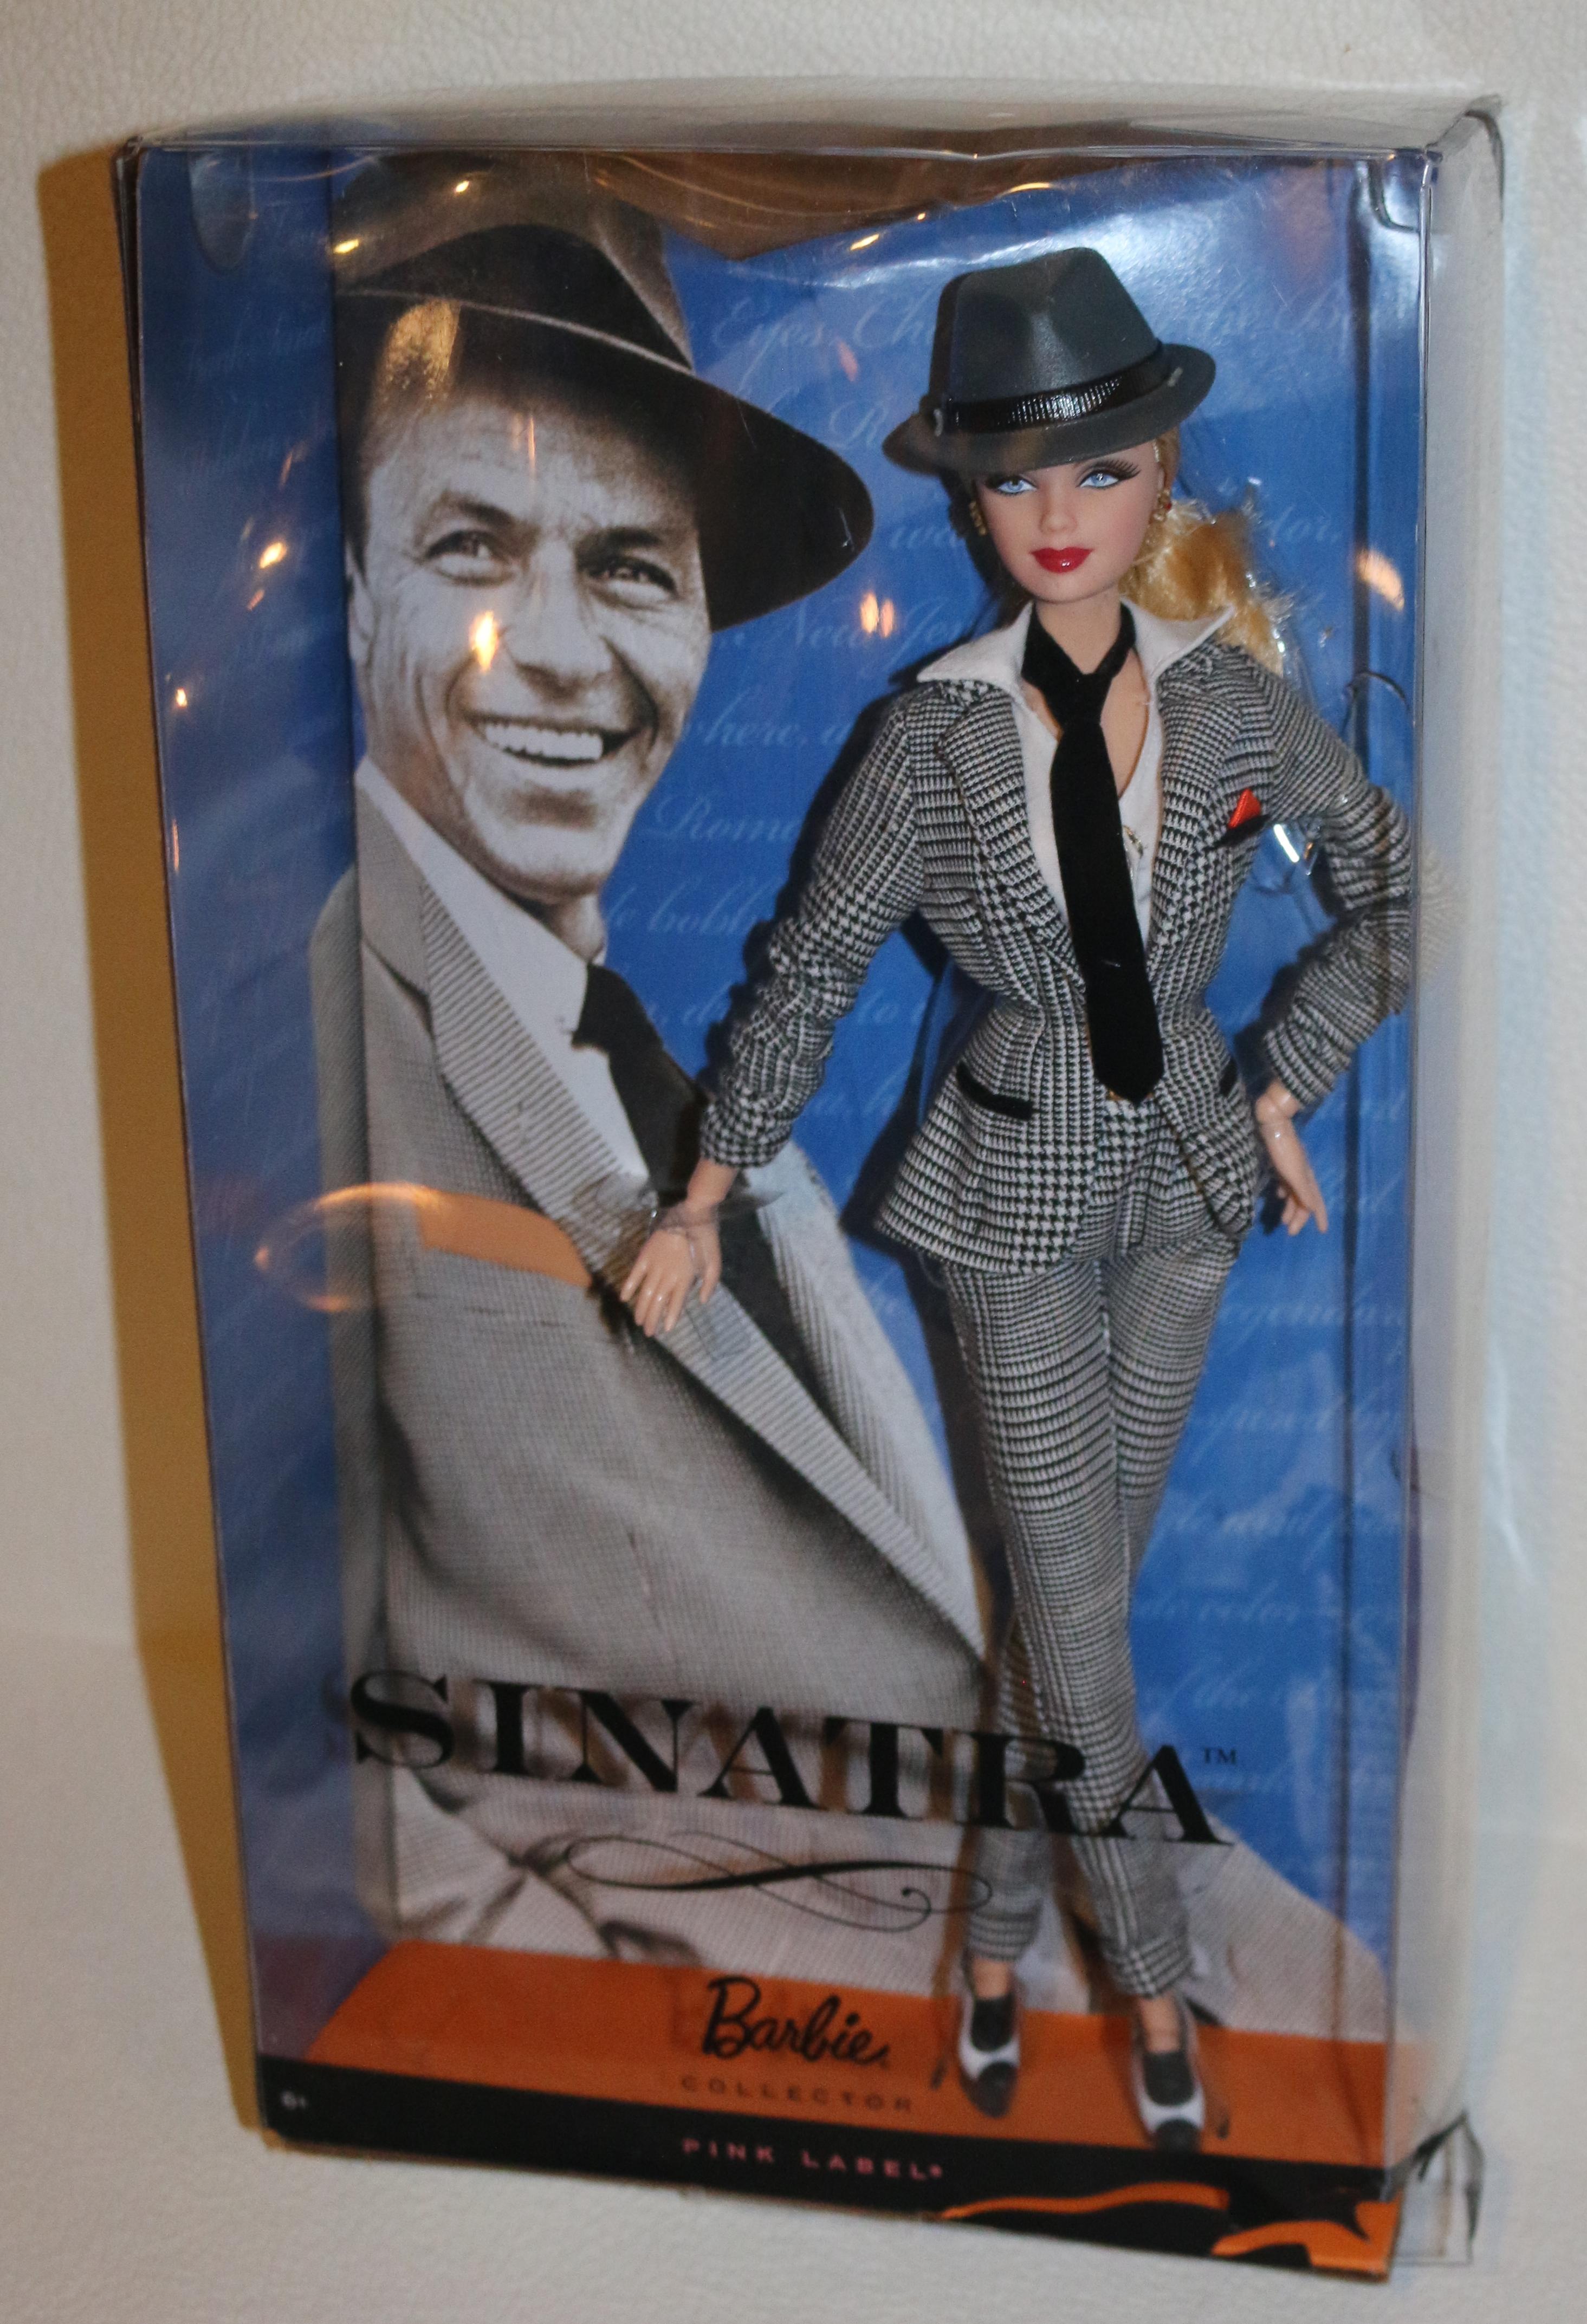 Share pink label 2011 Sinatra Barbie doll. New: A brand-new, unused, unopened, undamaged item (including handmade items).